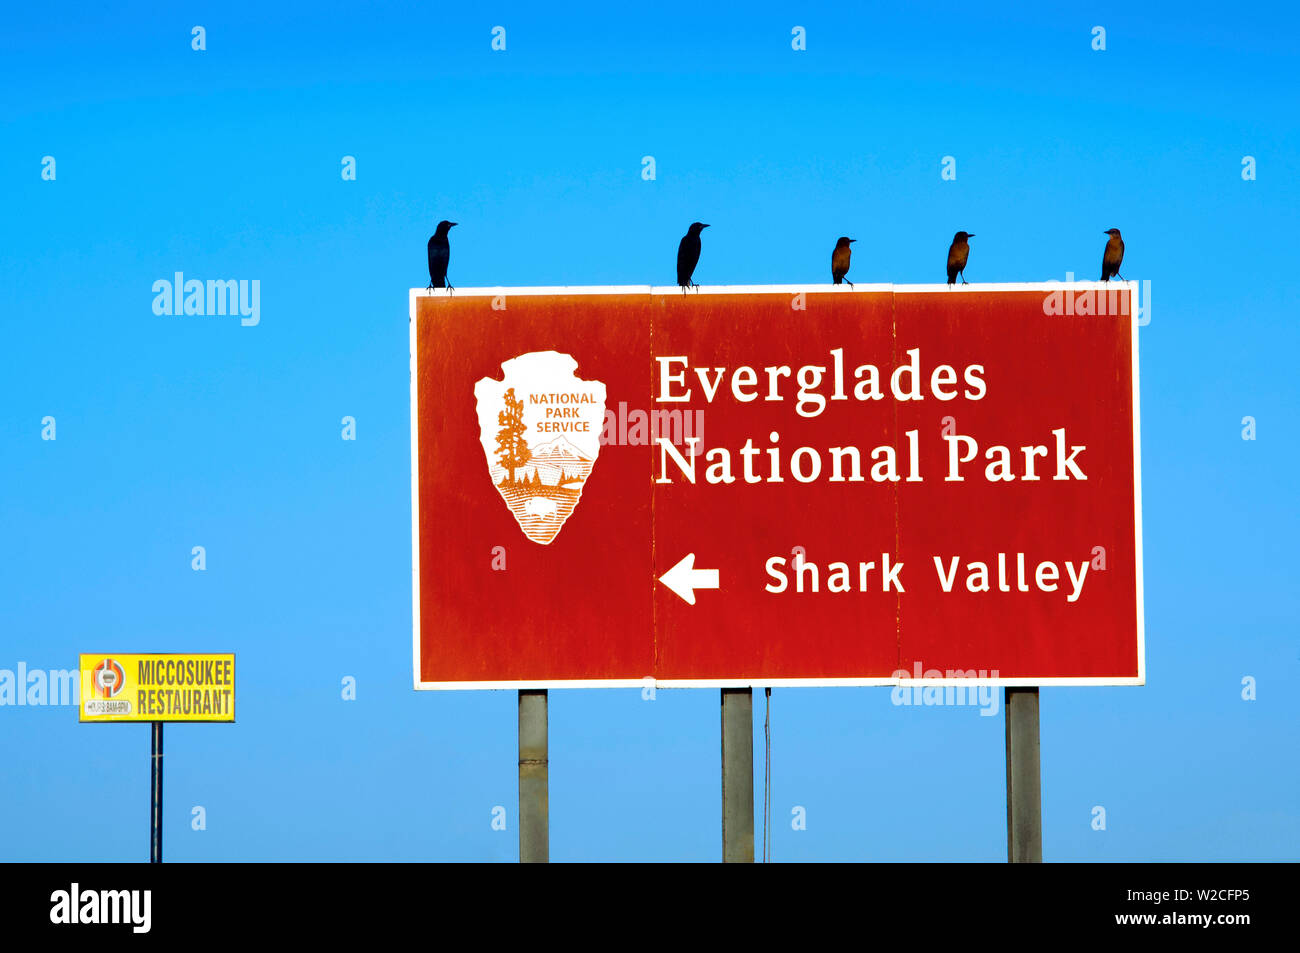 Florida Everglades National Park, Shark Valley, segno di ingresso Foto Stock